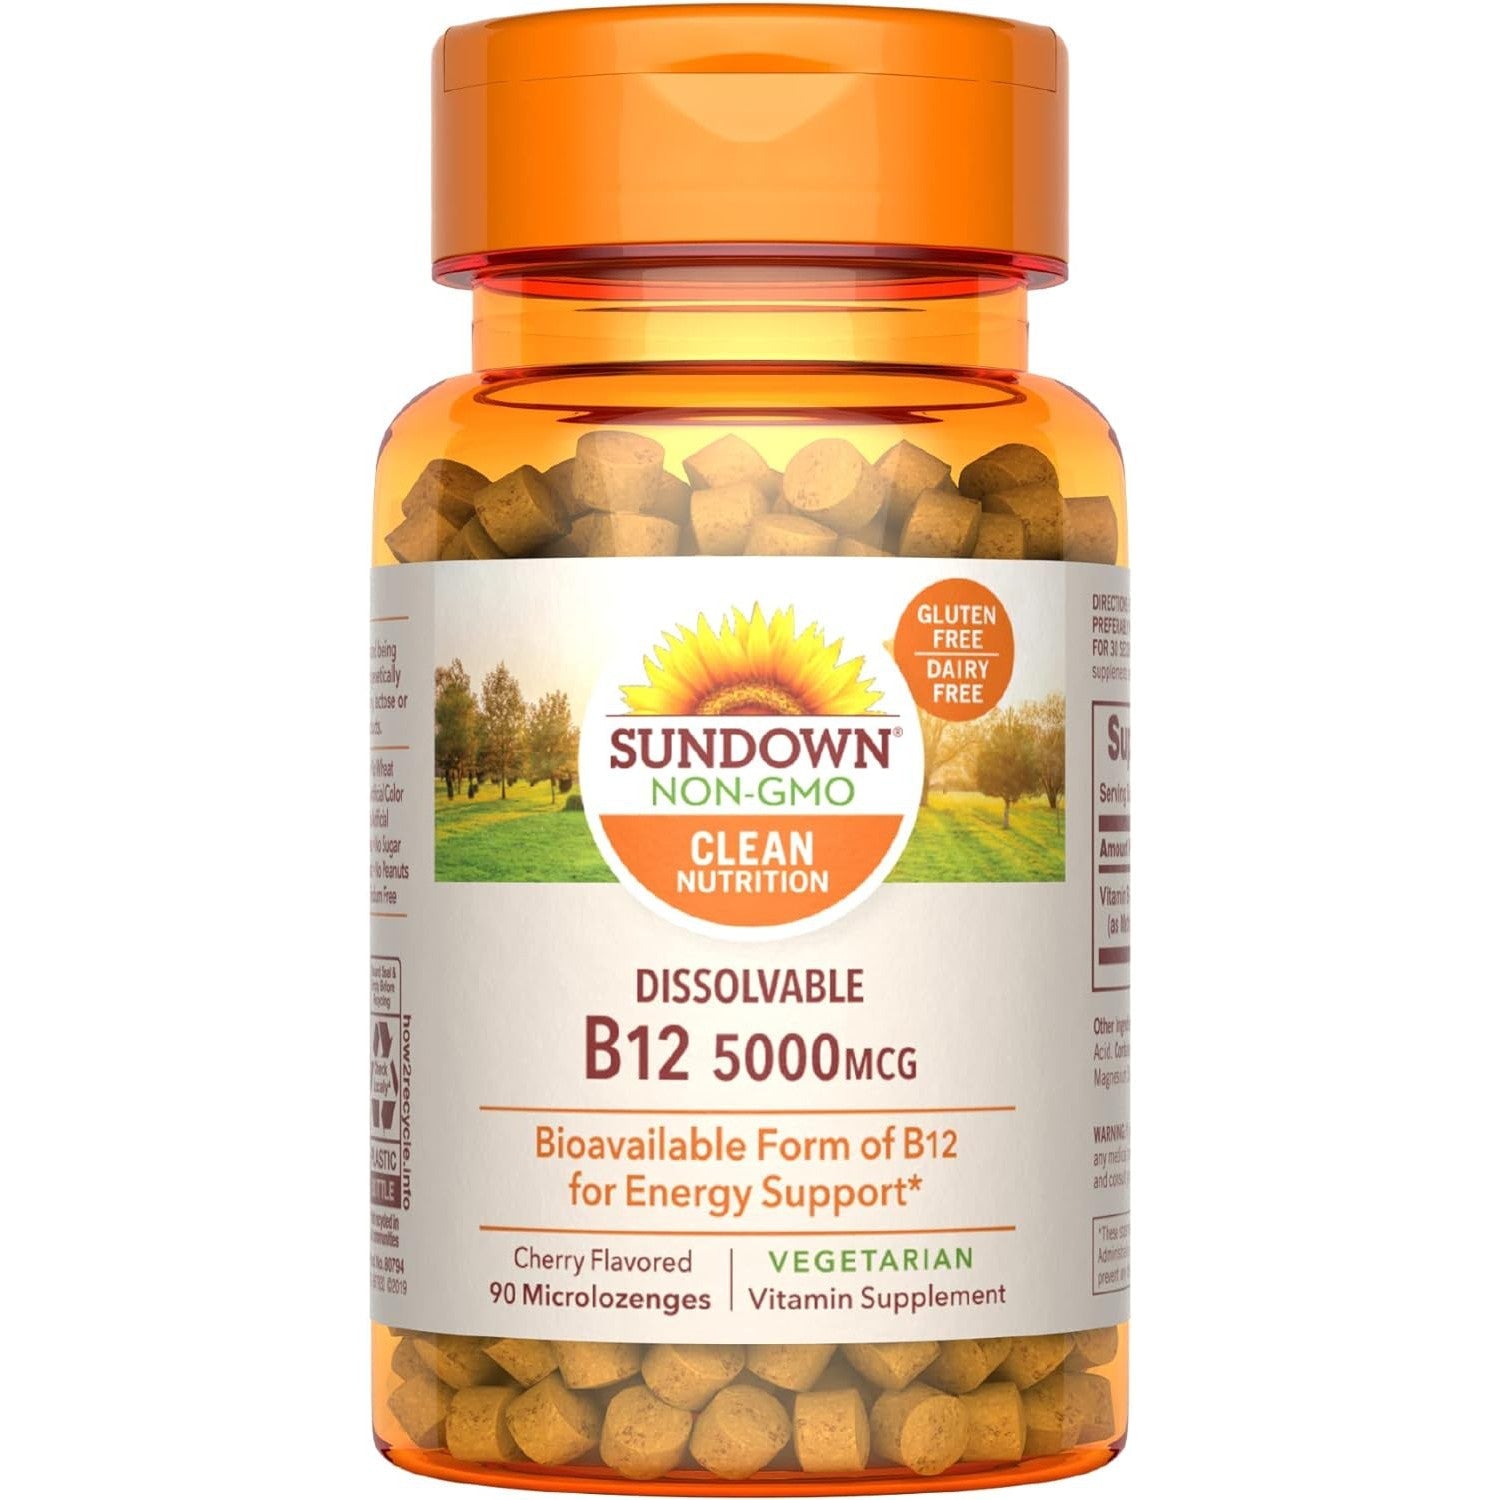 Sundown Dissolvable Vitamin B12 5000 MCG (as Methylcobalamin) 90 Microlozenges